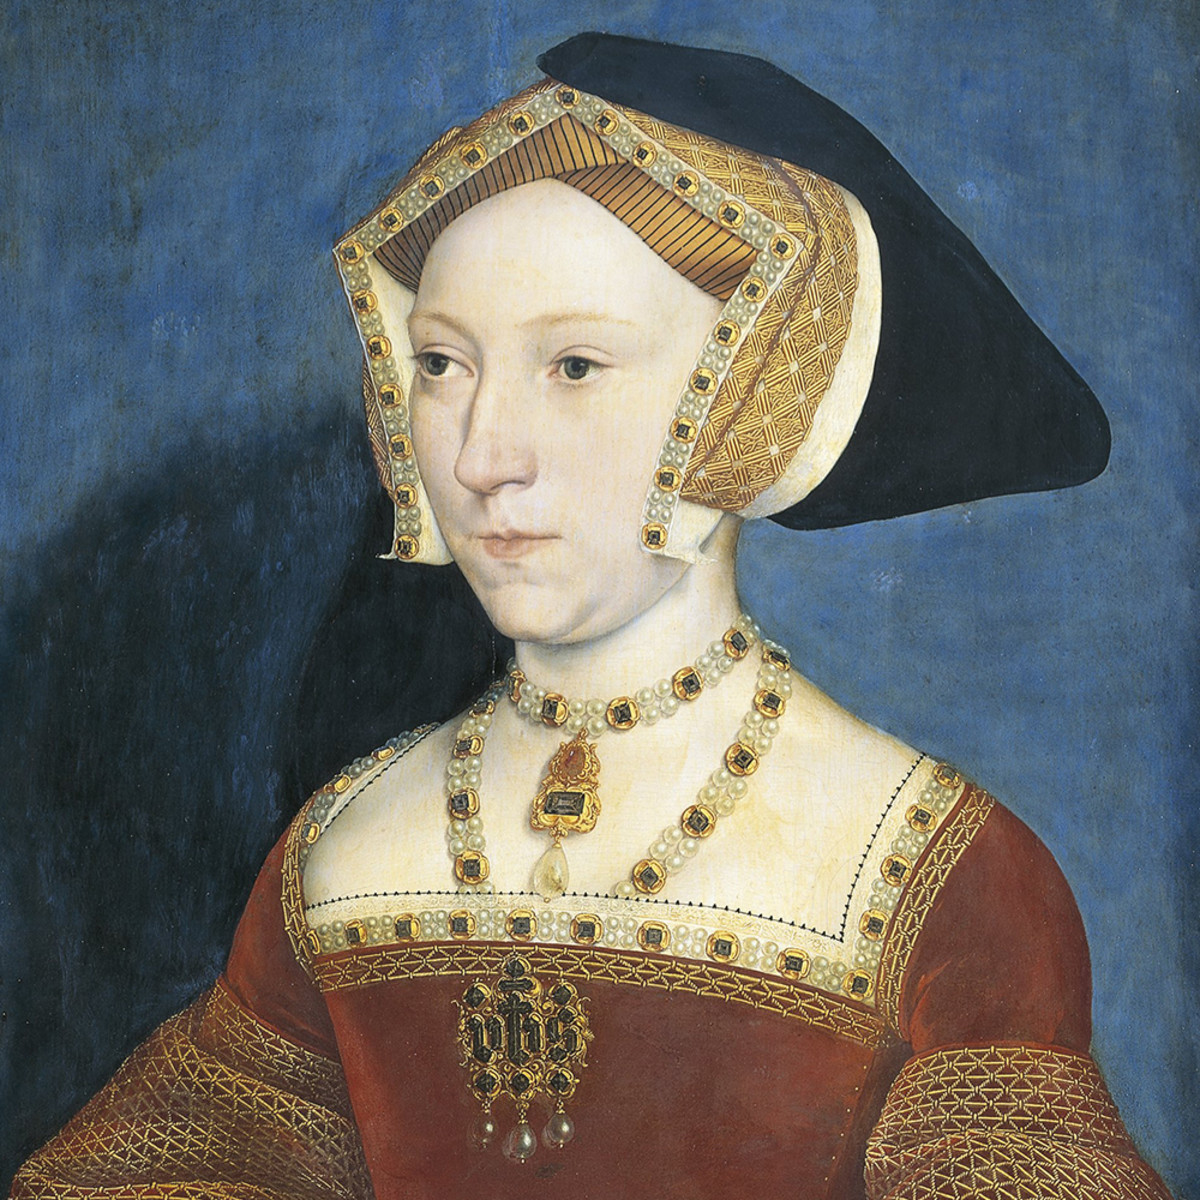 King Henry VIII's Wives: Divorce, Death Or Beheading